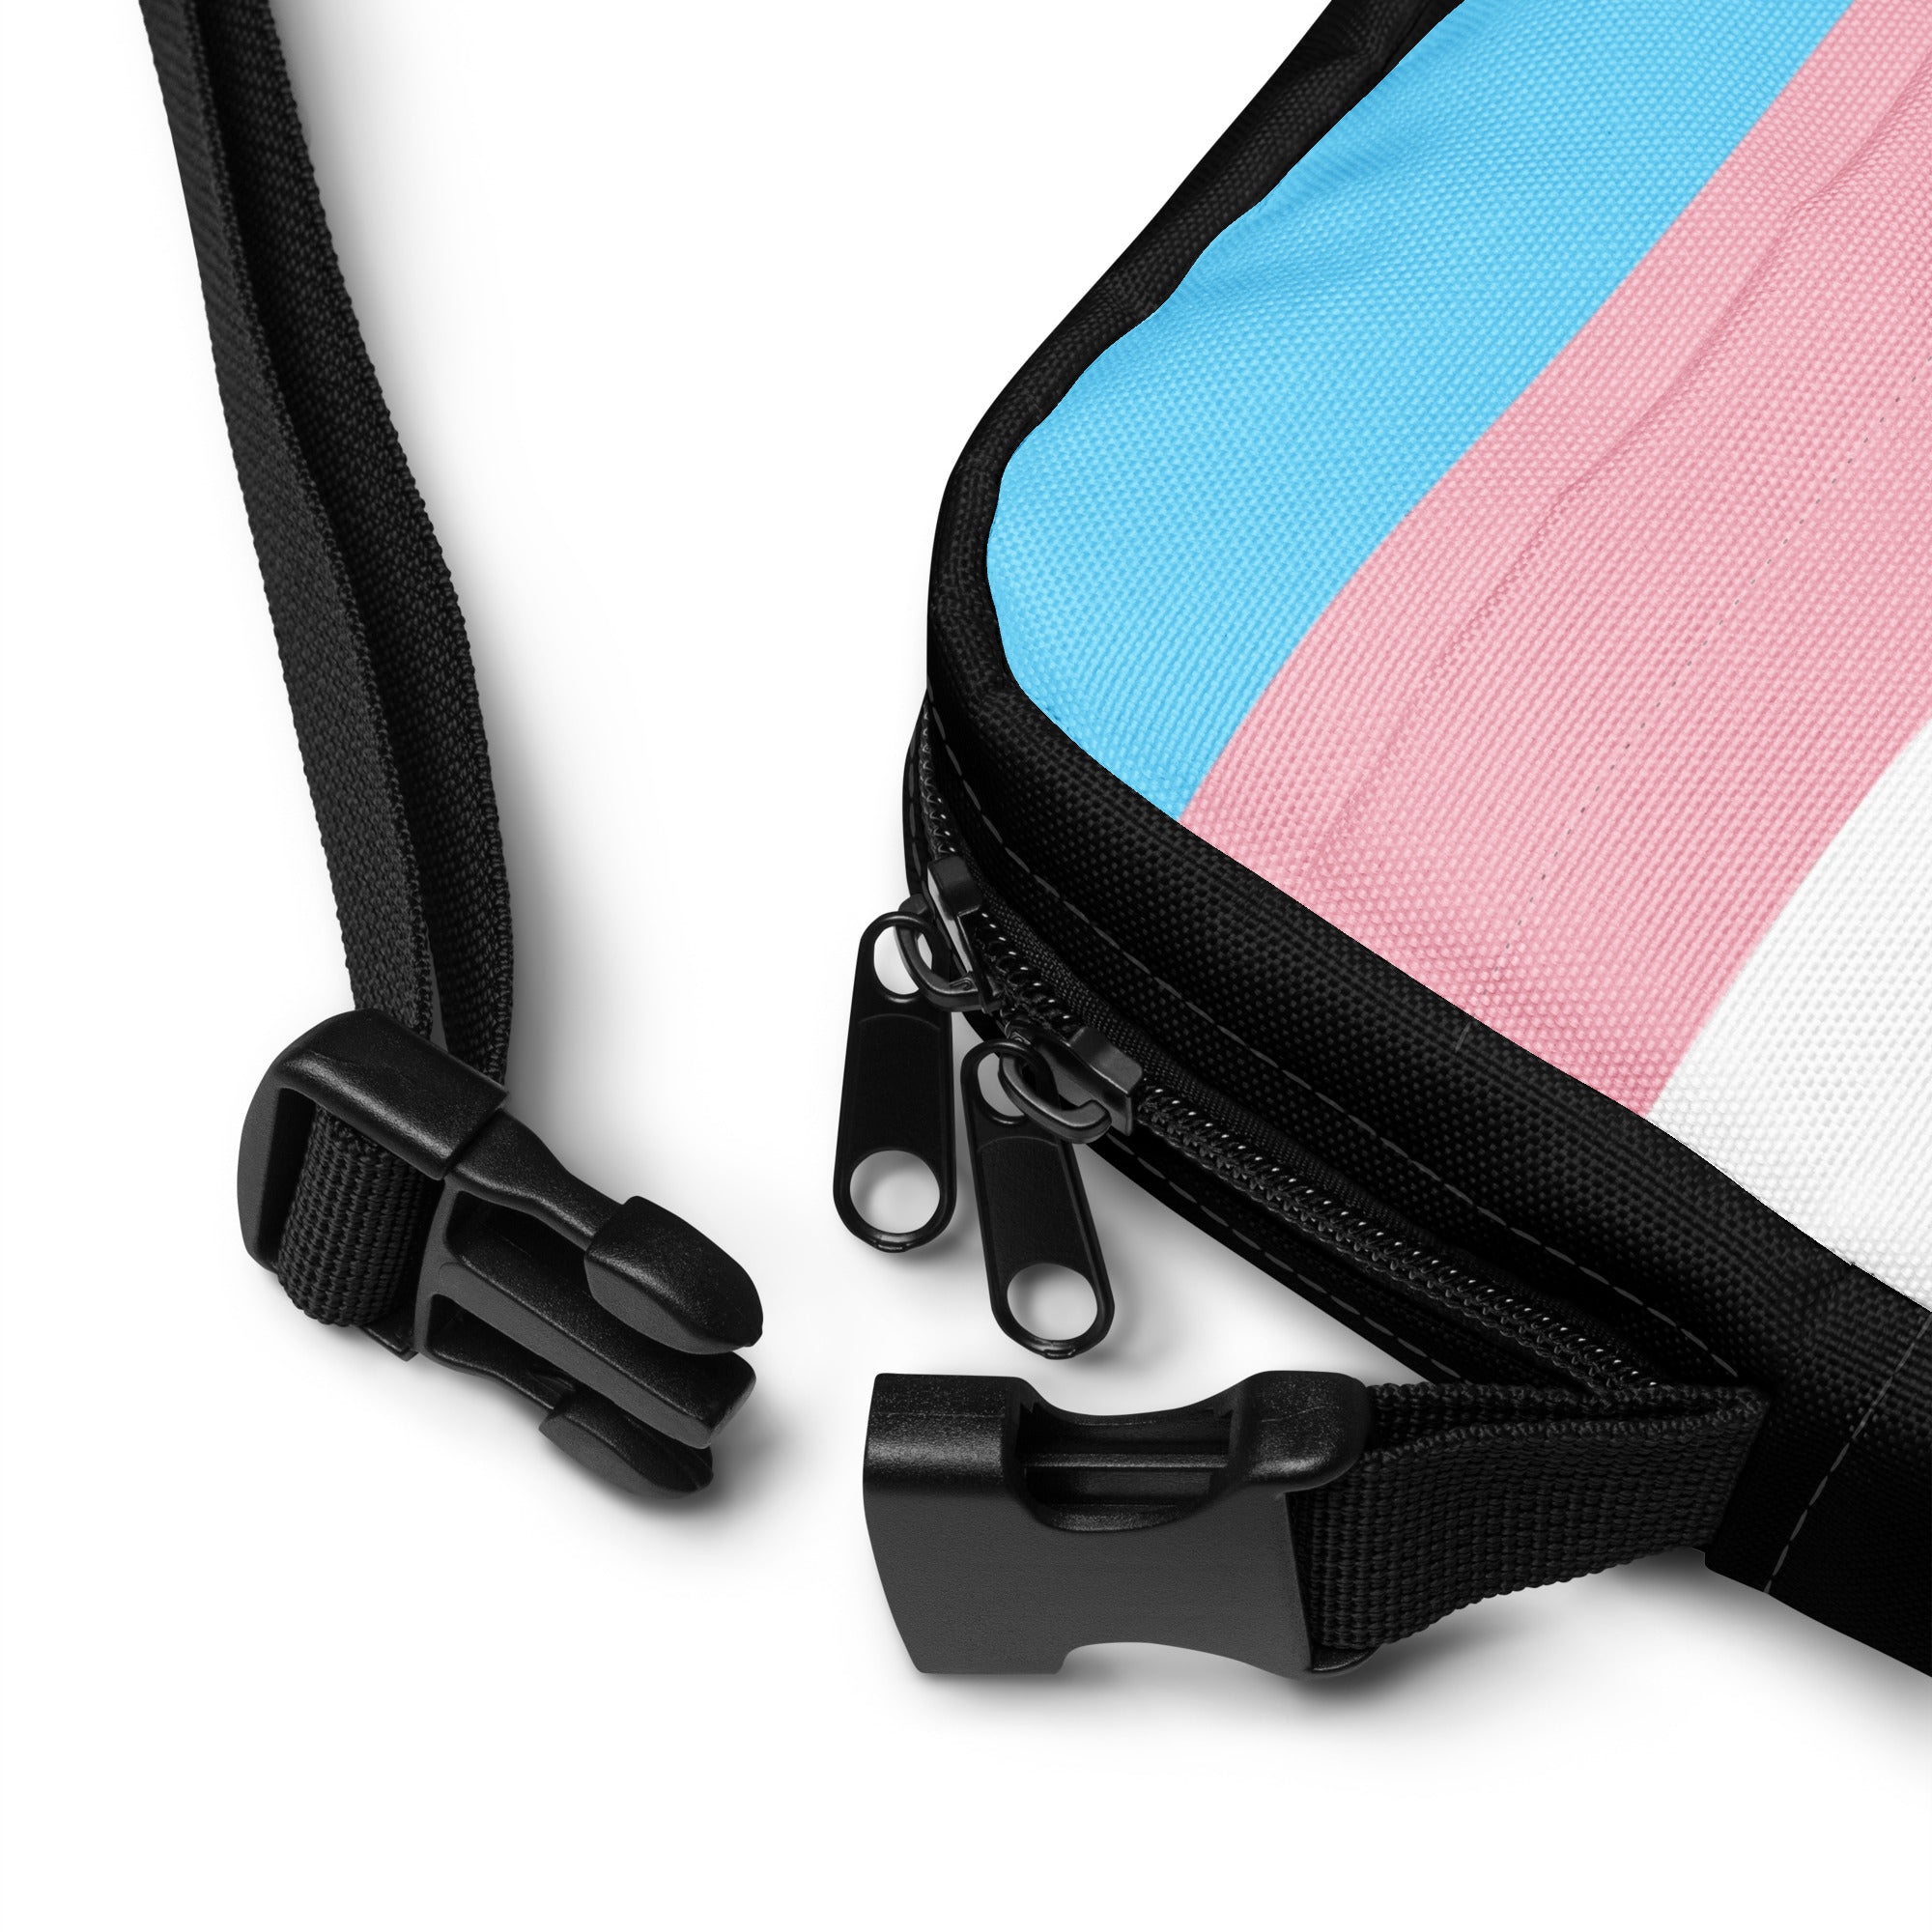 Utility crossbody bag- Transgender